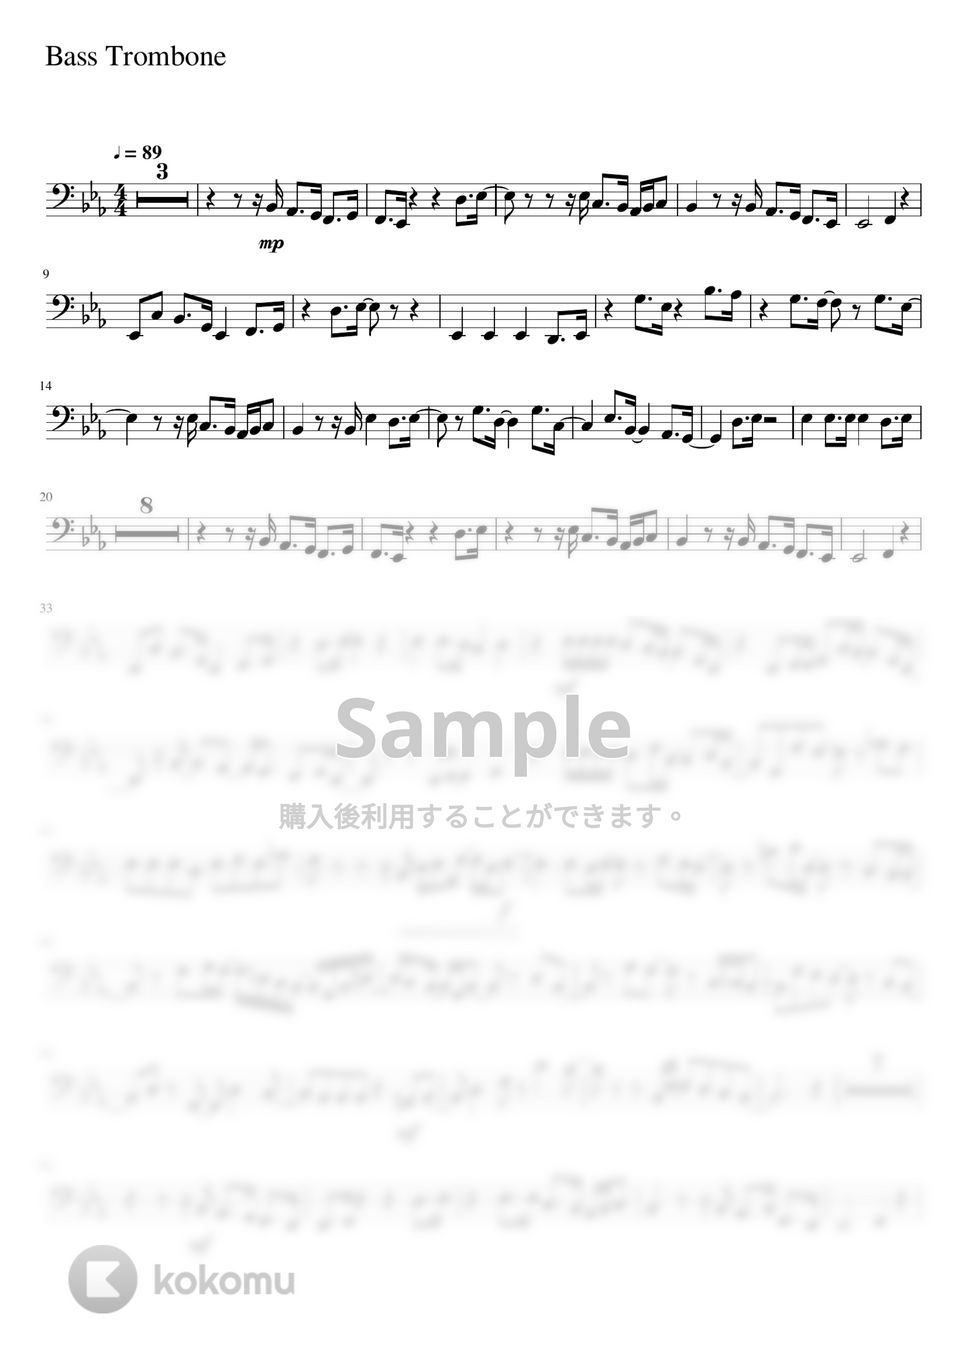 星野 源 - 不思議 (-Bass Trombone Solo- 原キー) by Creampuff